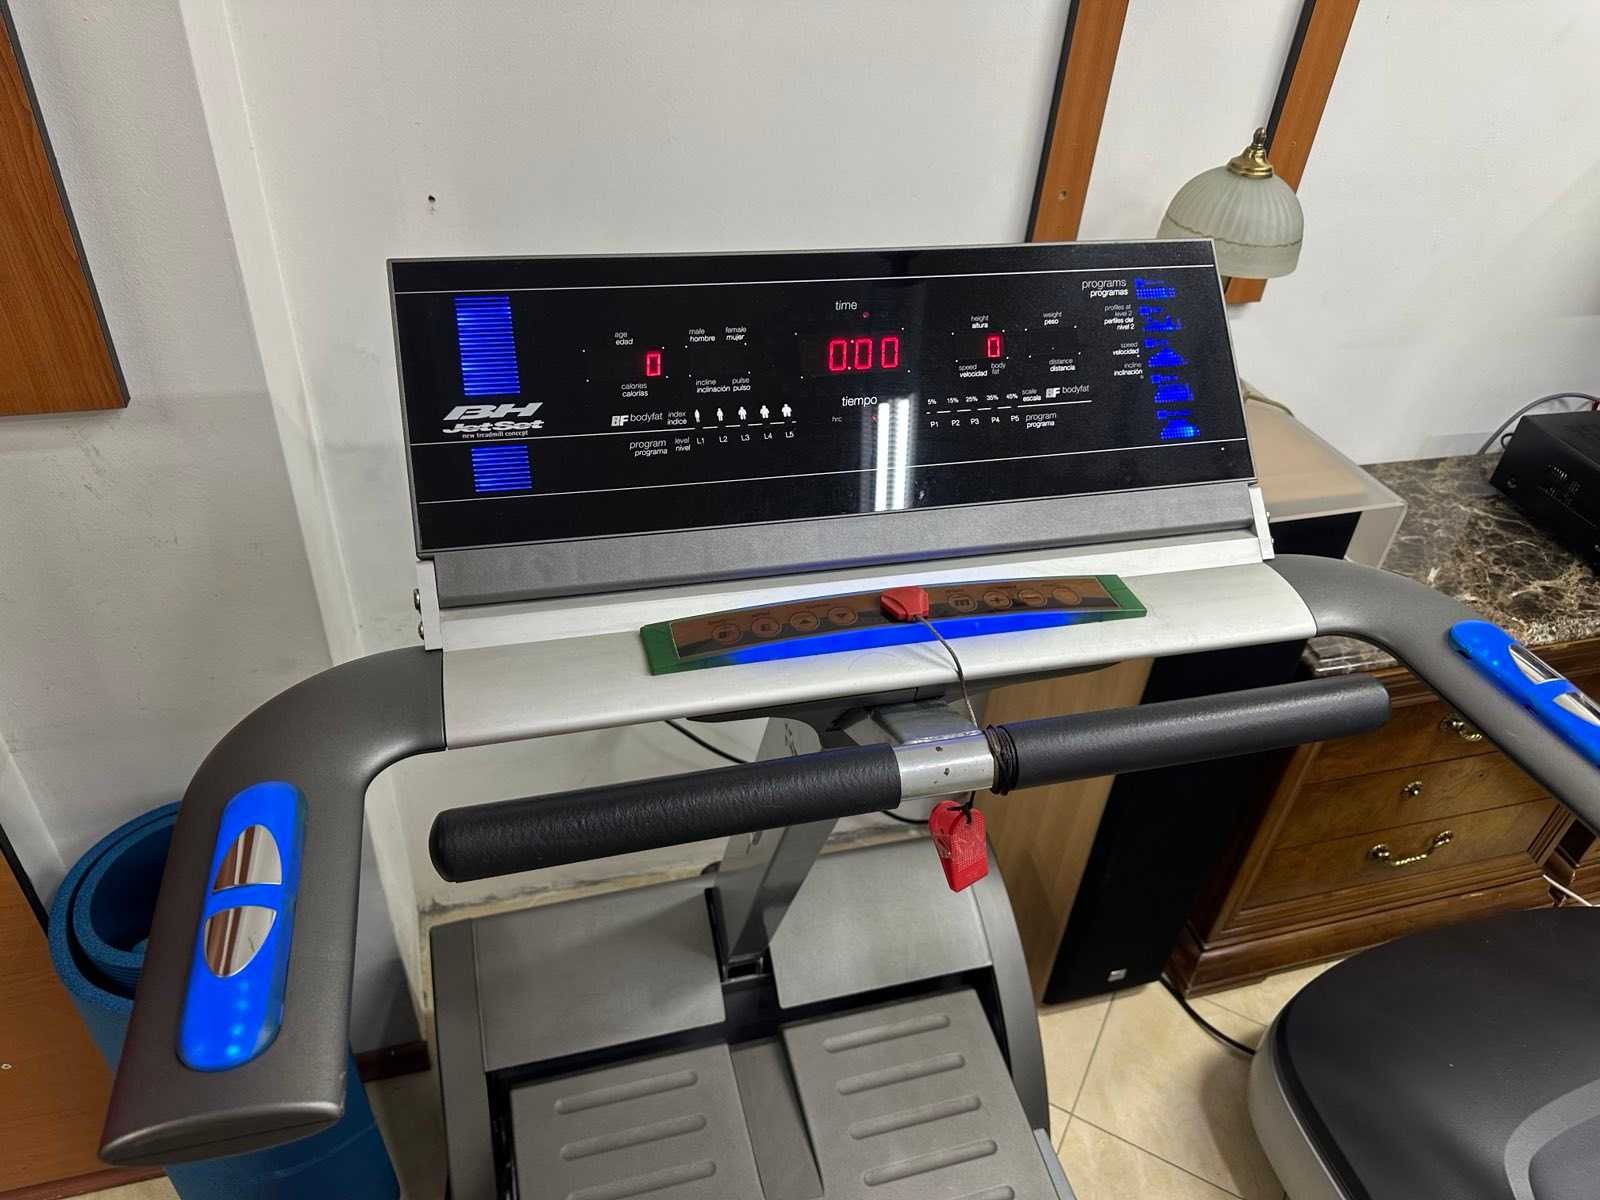 Бягаща пътека BH Fitnes Jet Set New Treadmill Concept